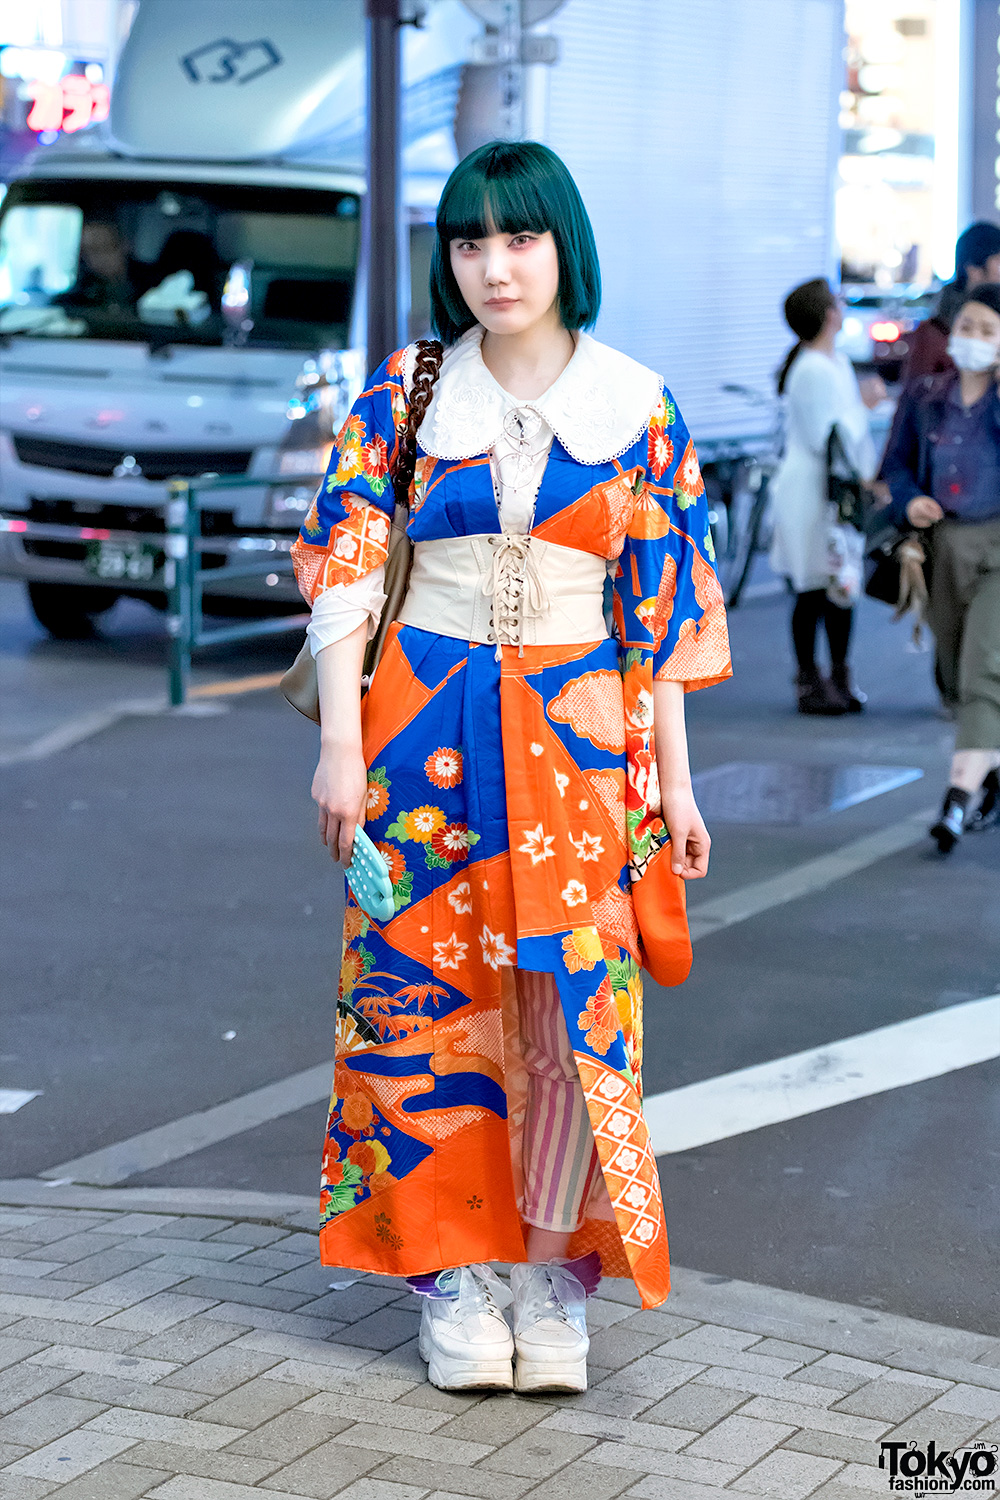 Kimono Jacket Corset Blue Hair And Winged Shoes In Harajuku